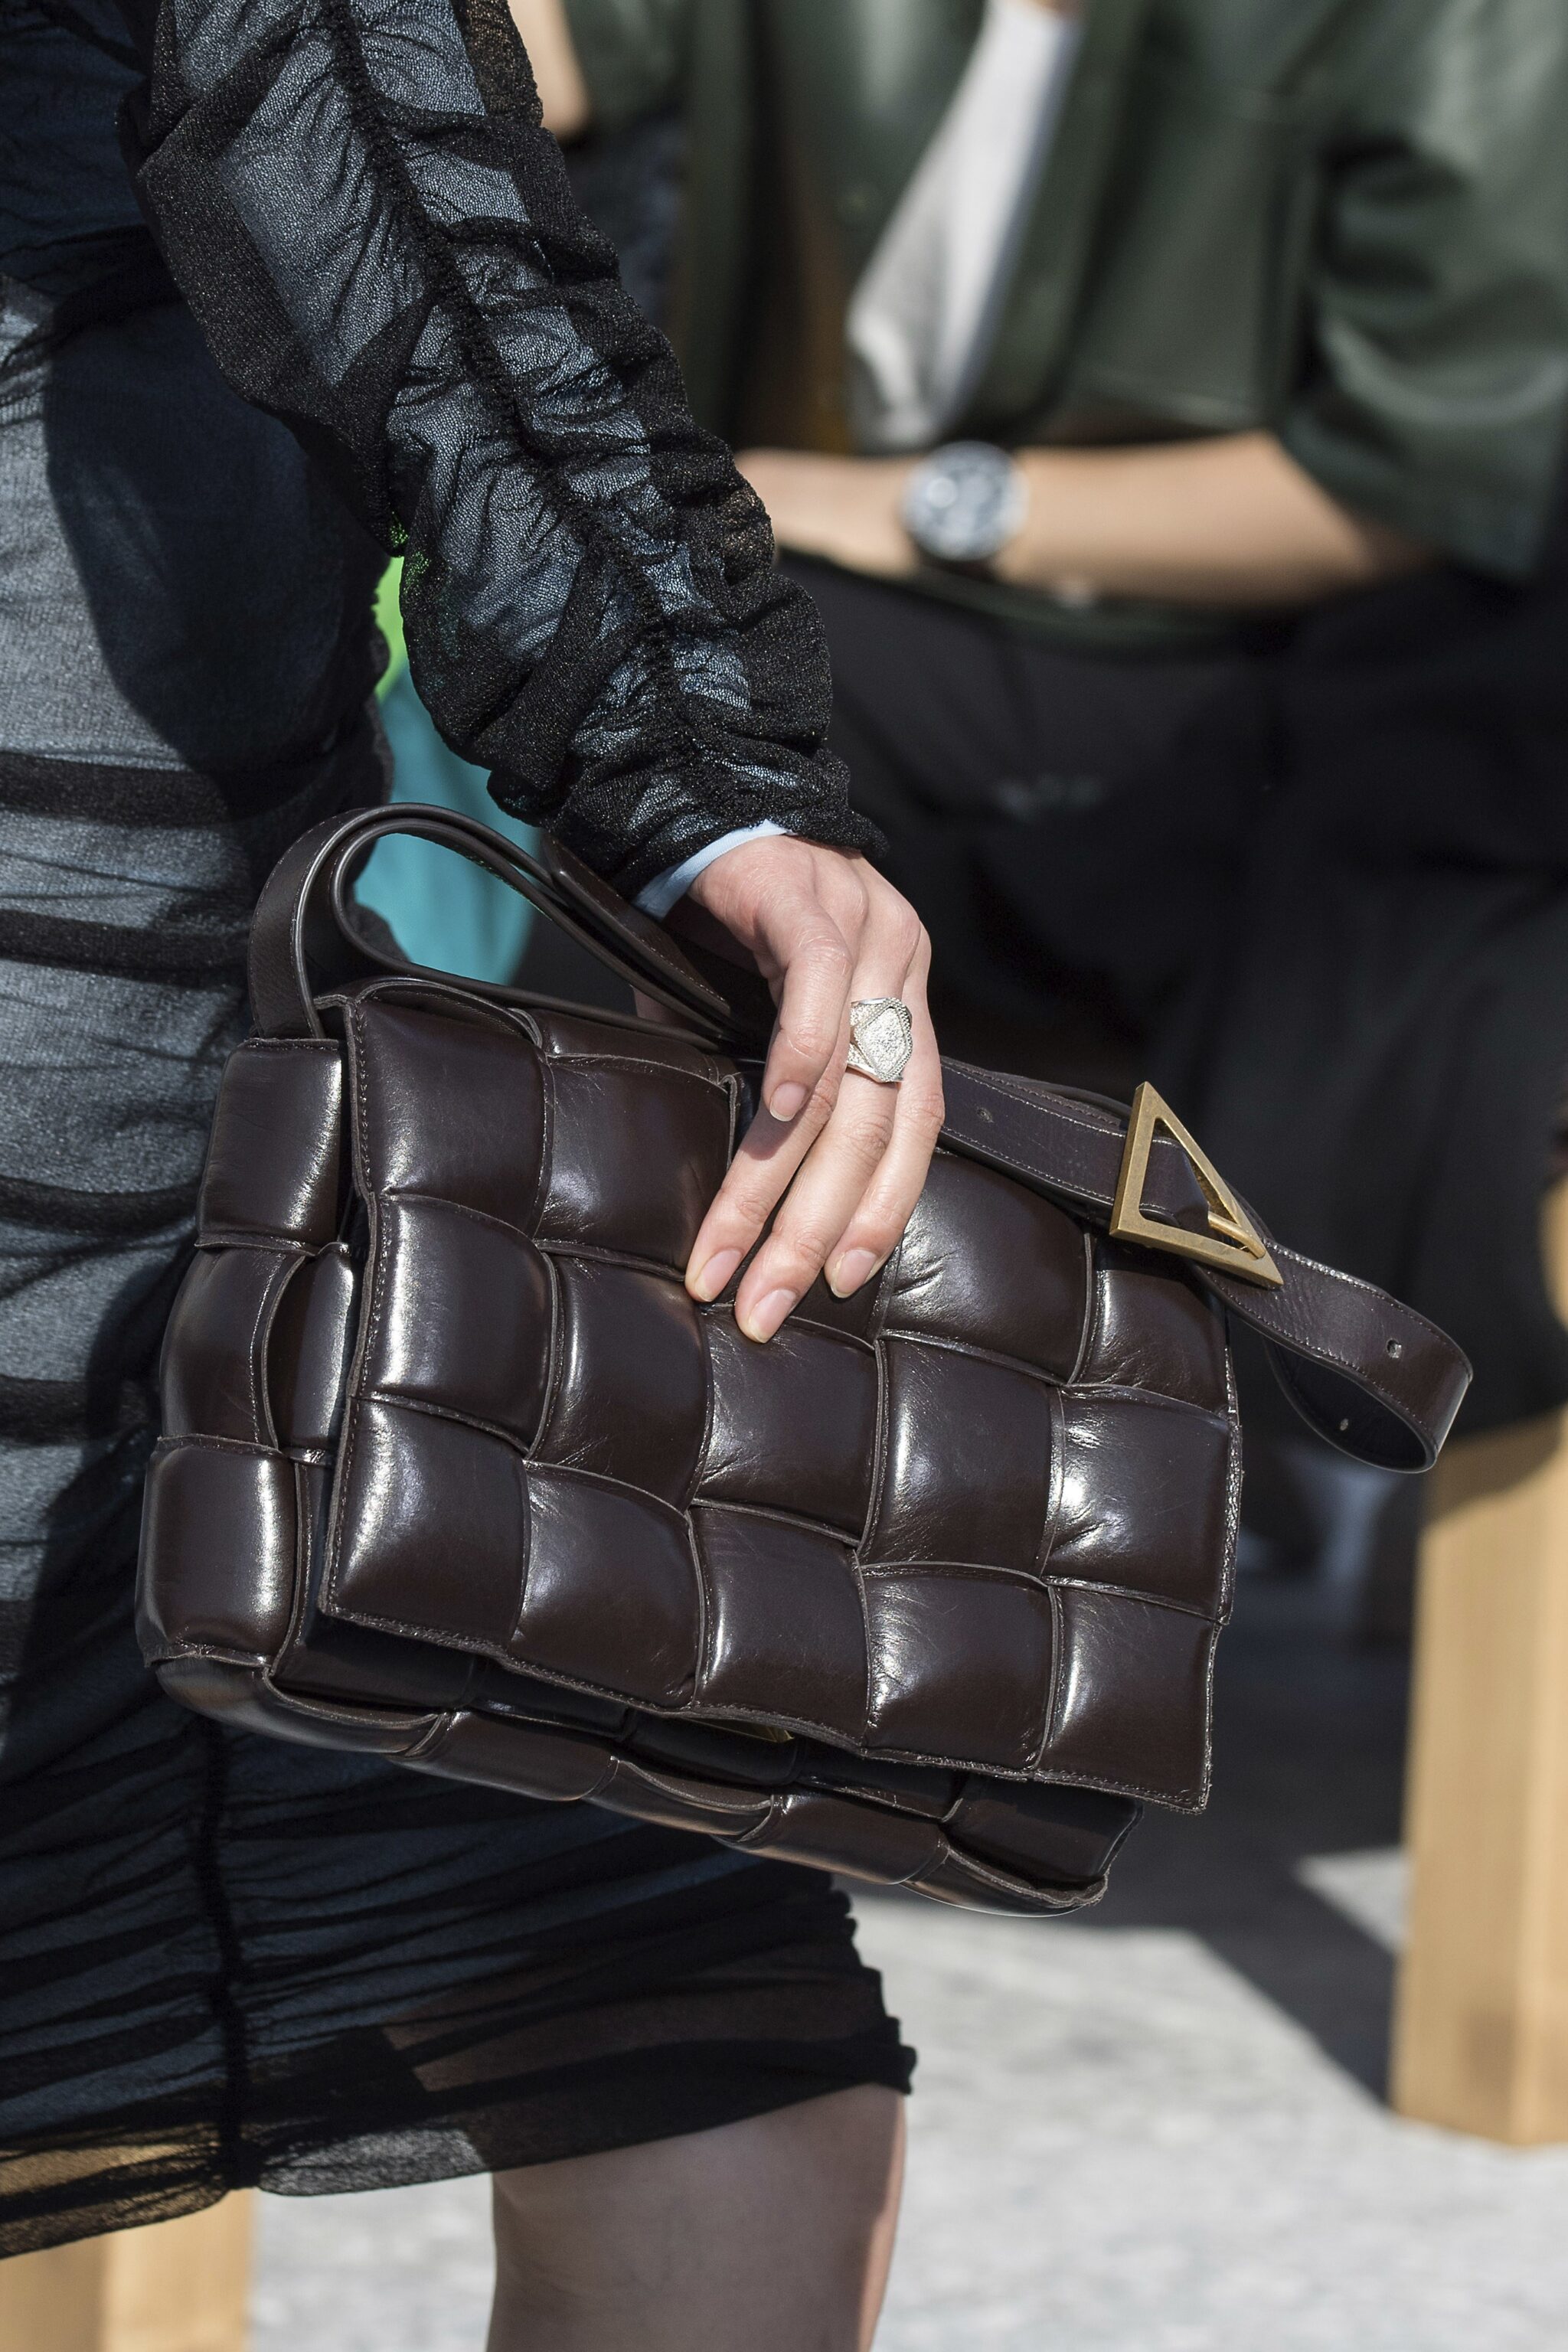 Most Popular Designer Handbags Fall 2021 Tax | semashow.com